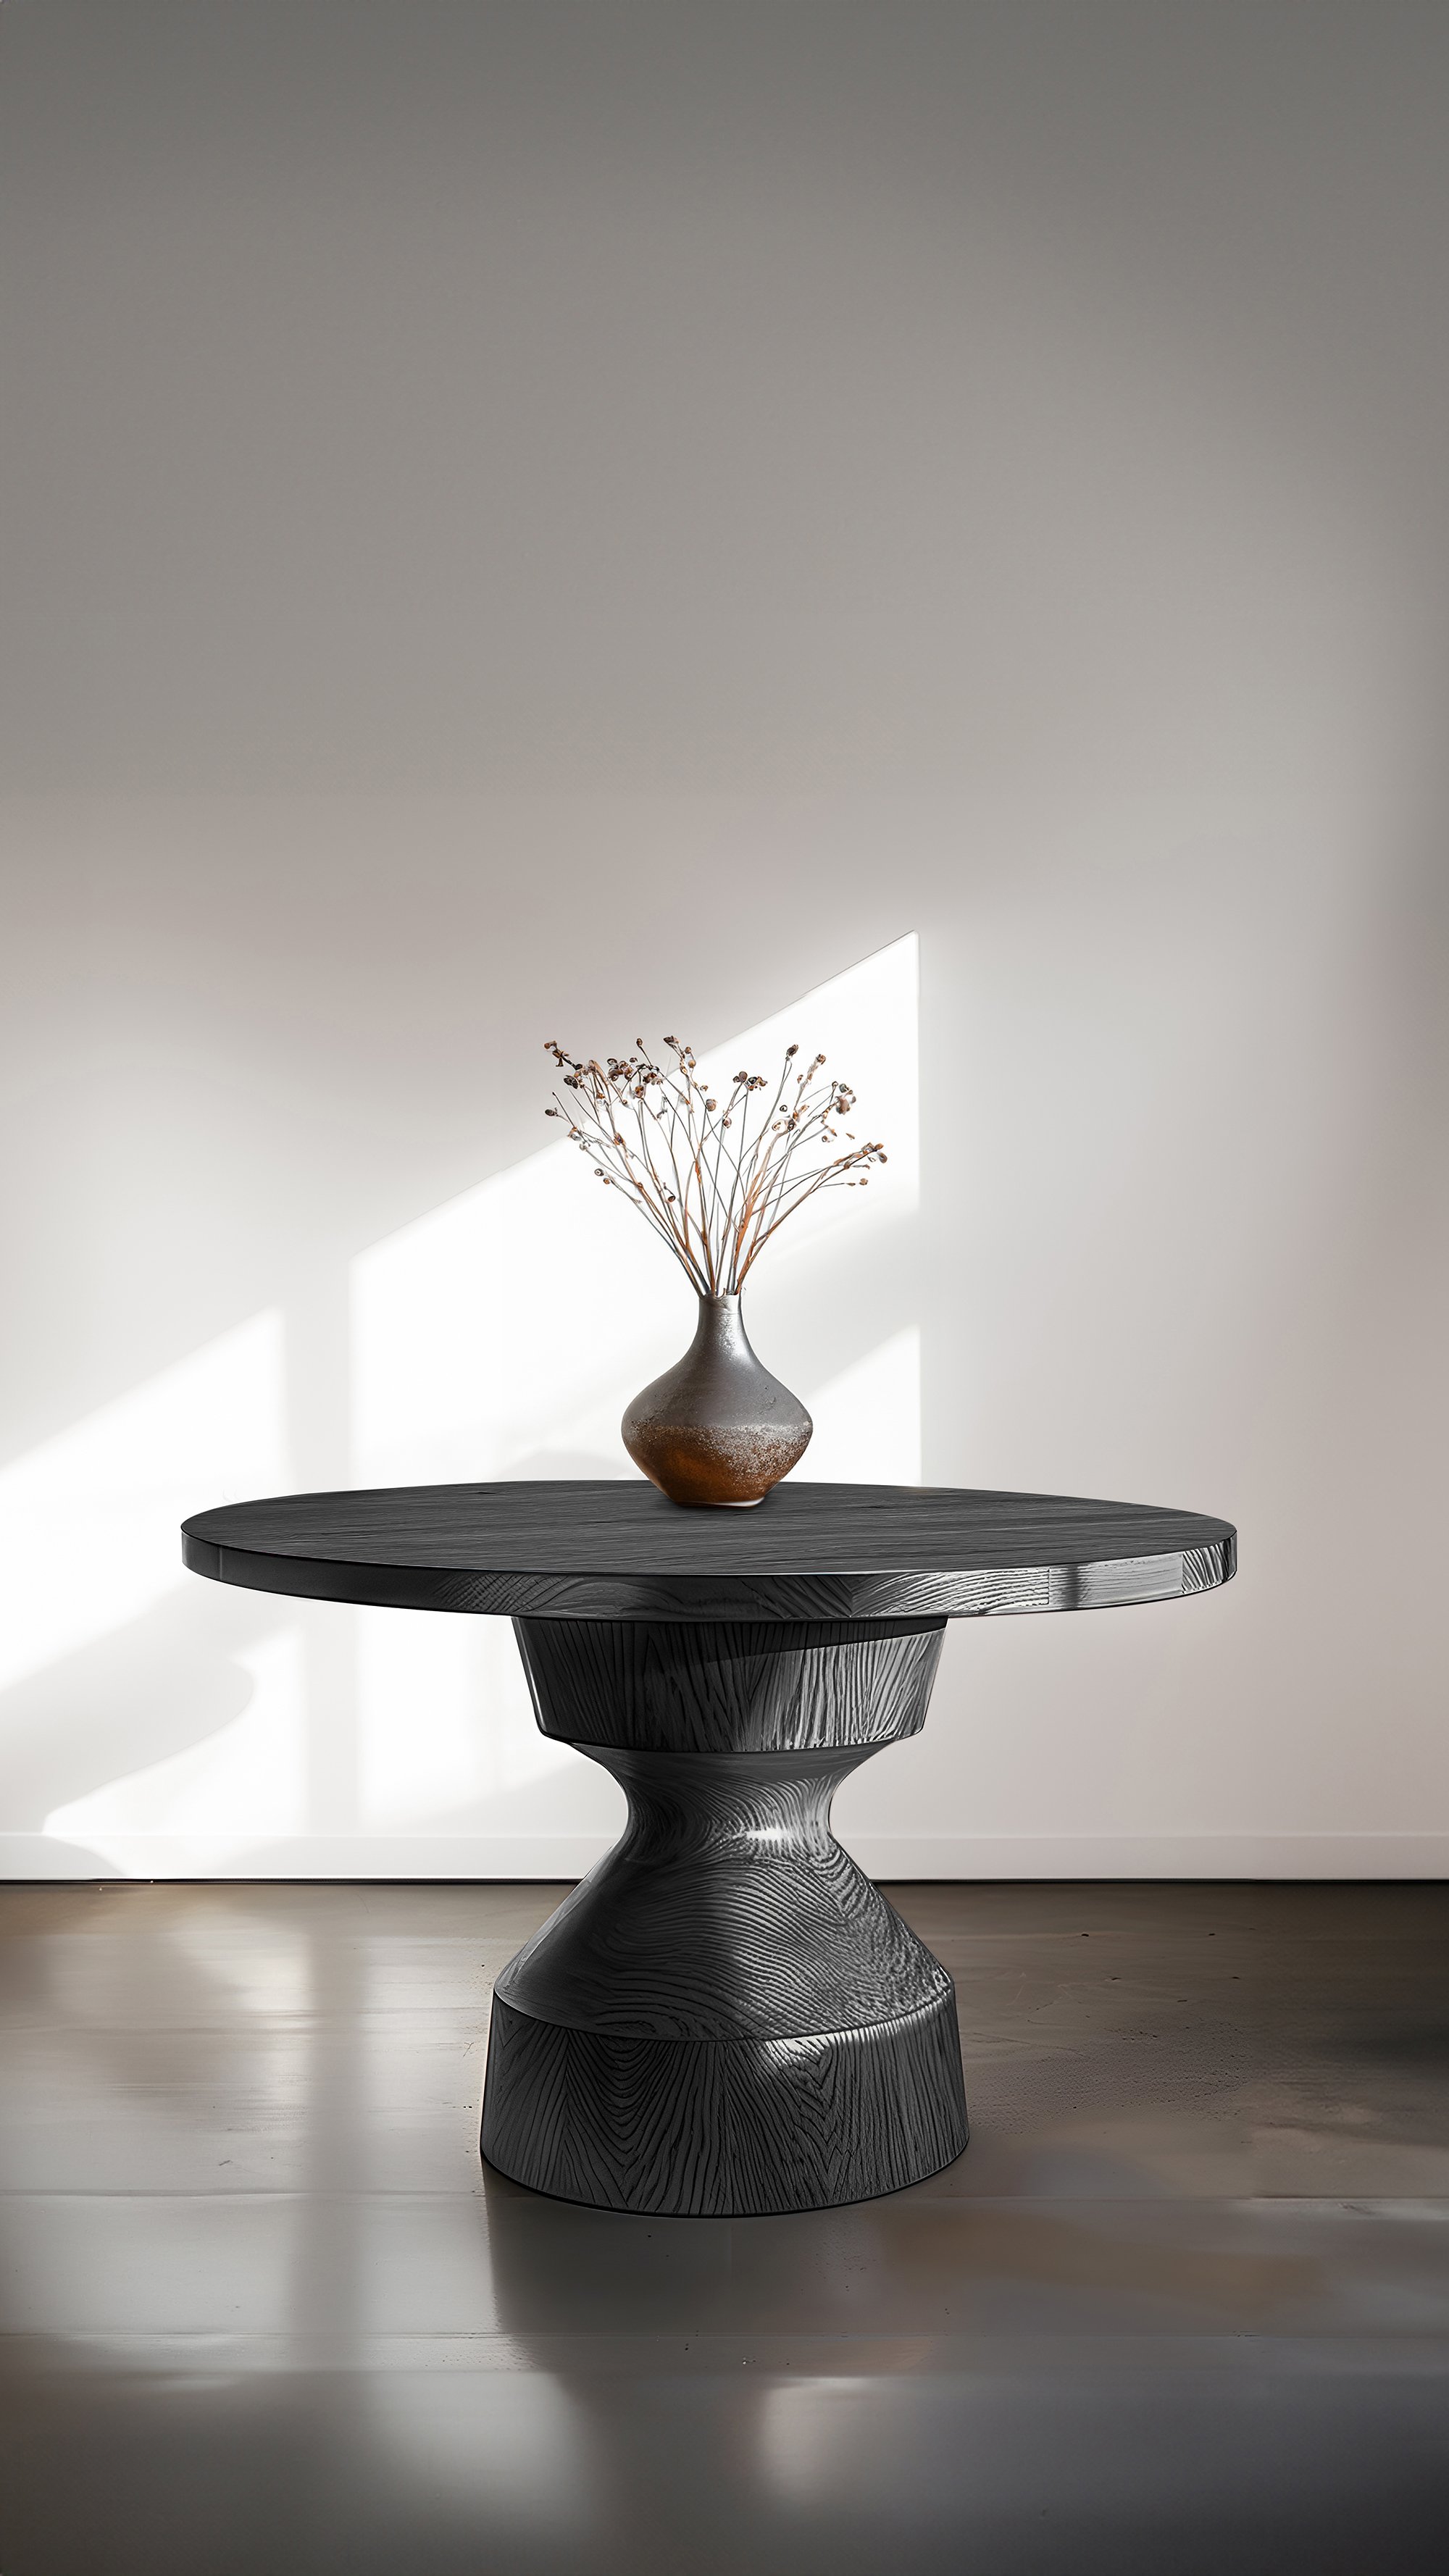 Socle by Joel Escalona, Black Wood Conference Tables, Design Meets Function No19 - 5.jpg